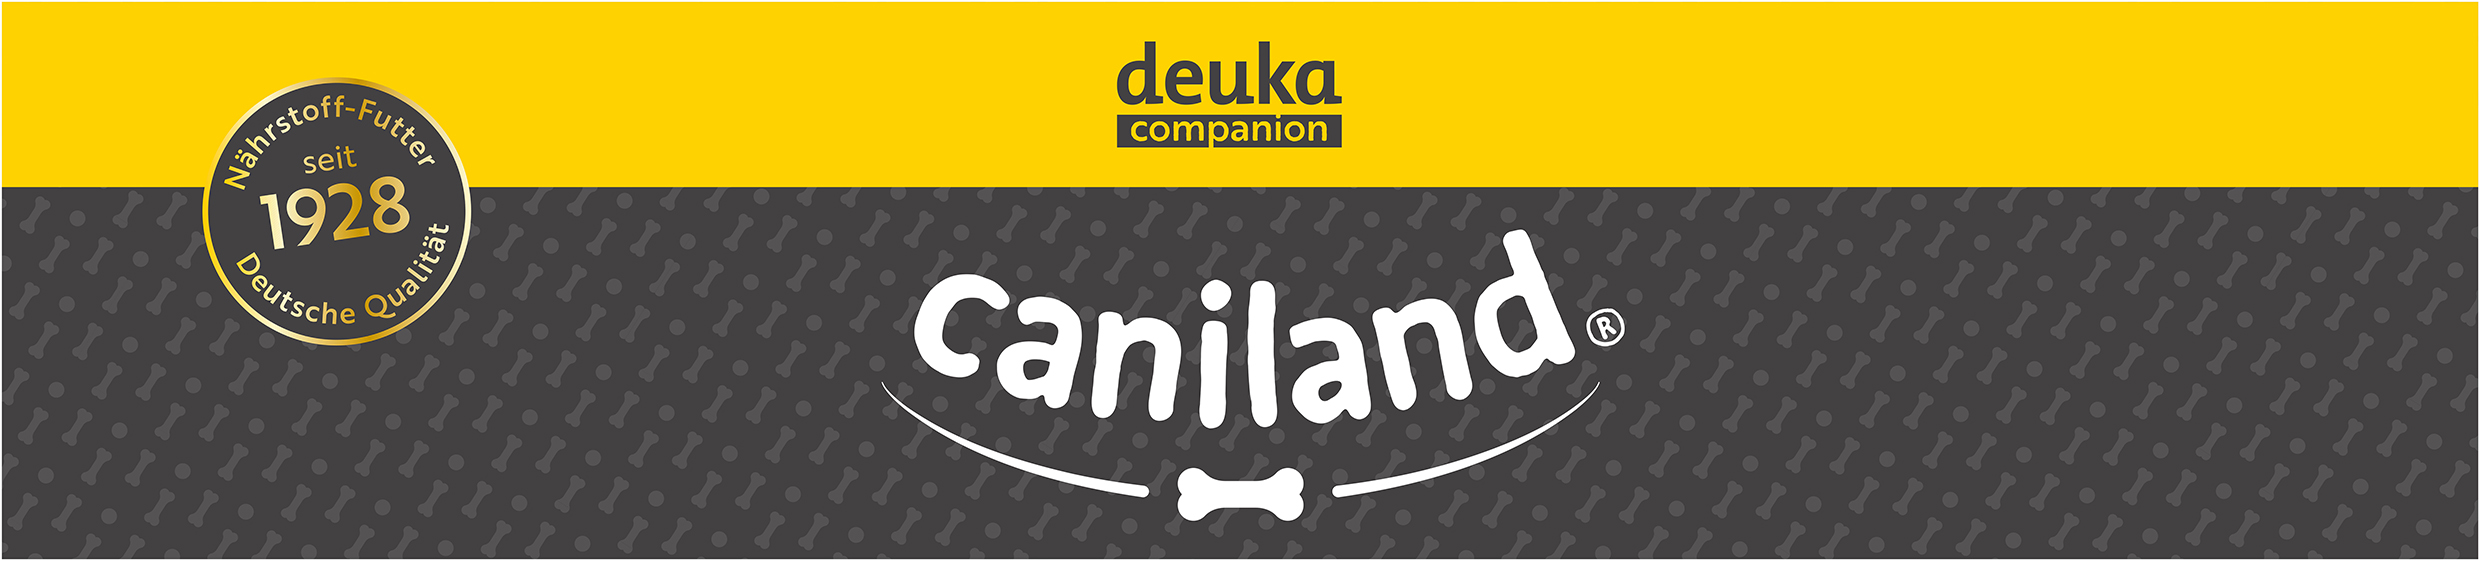 caniland Deuka companion logo